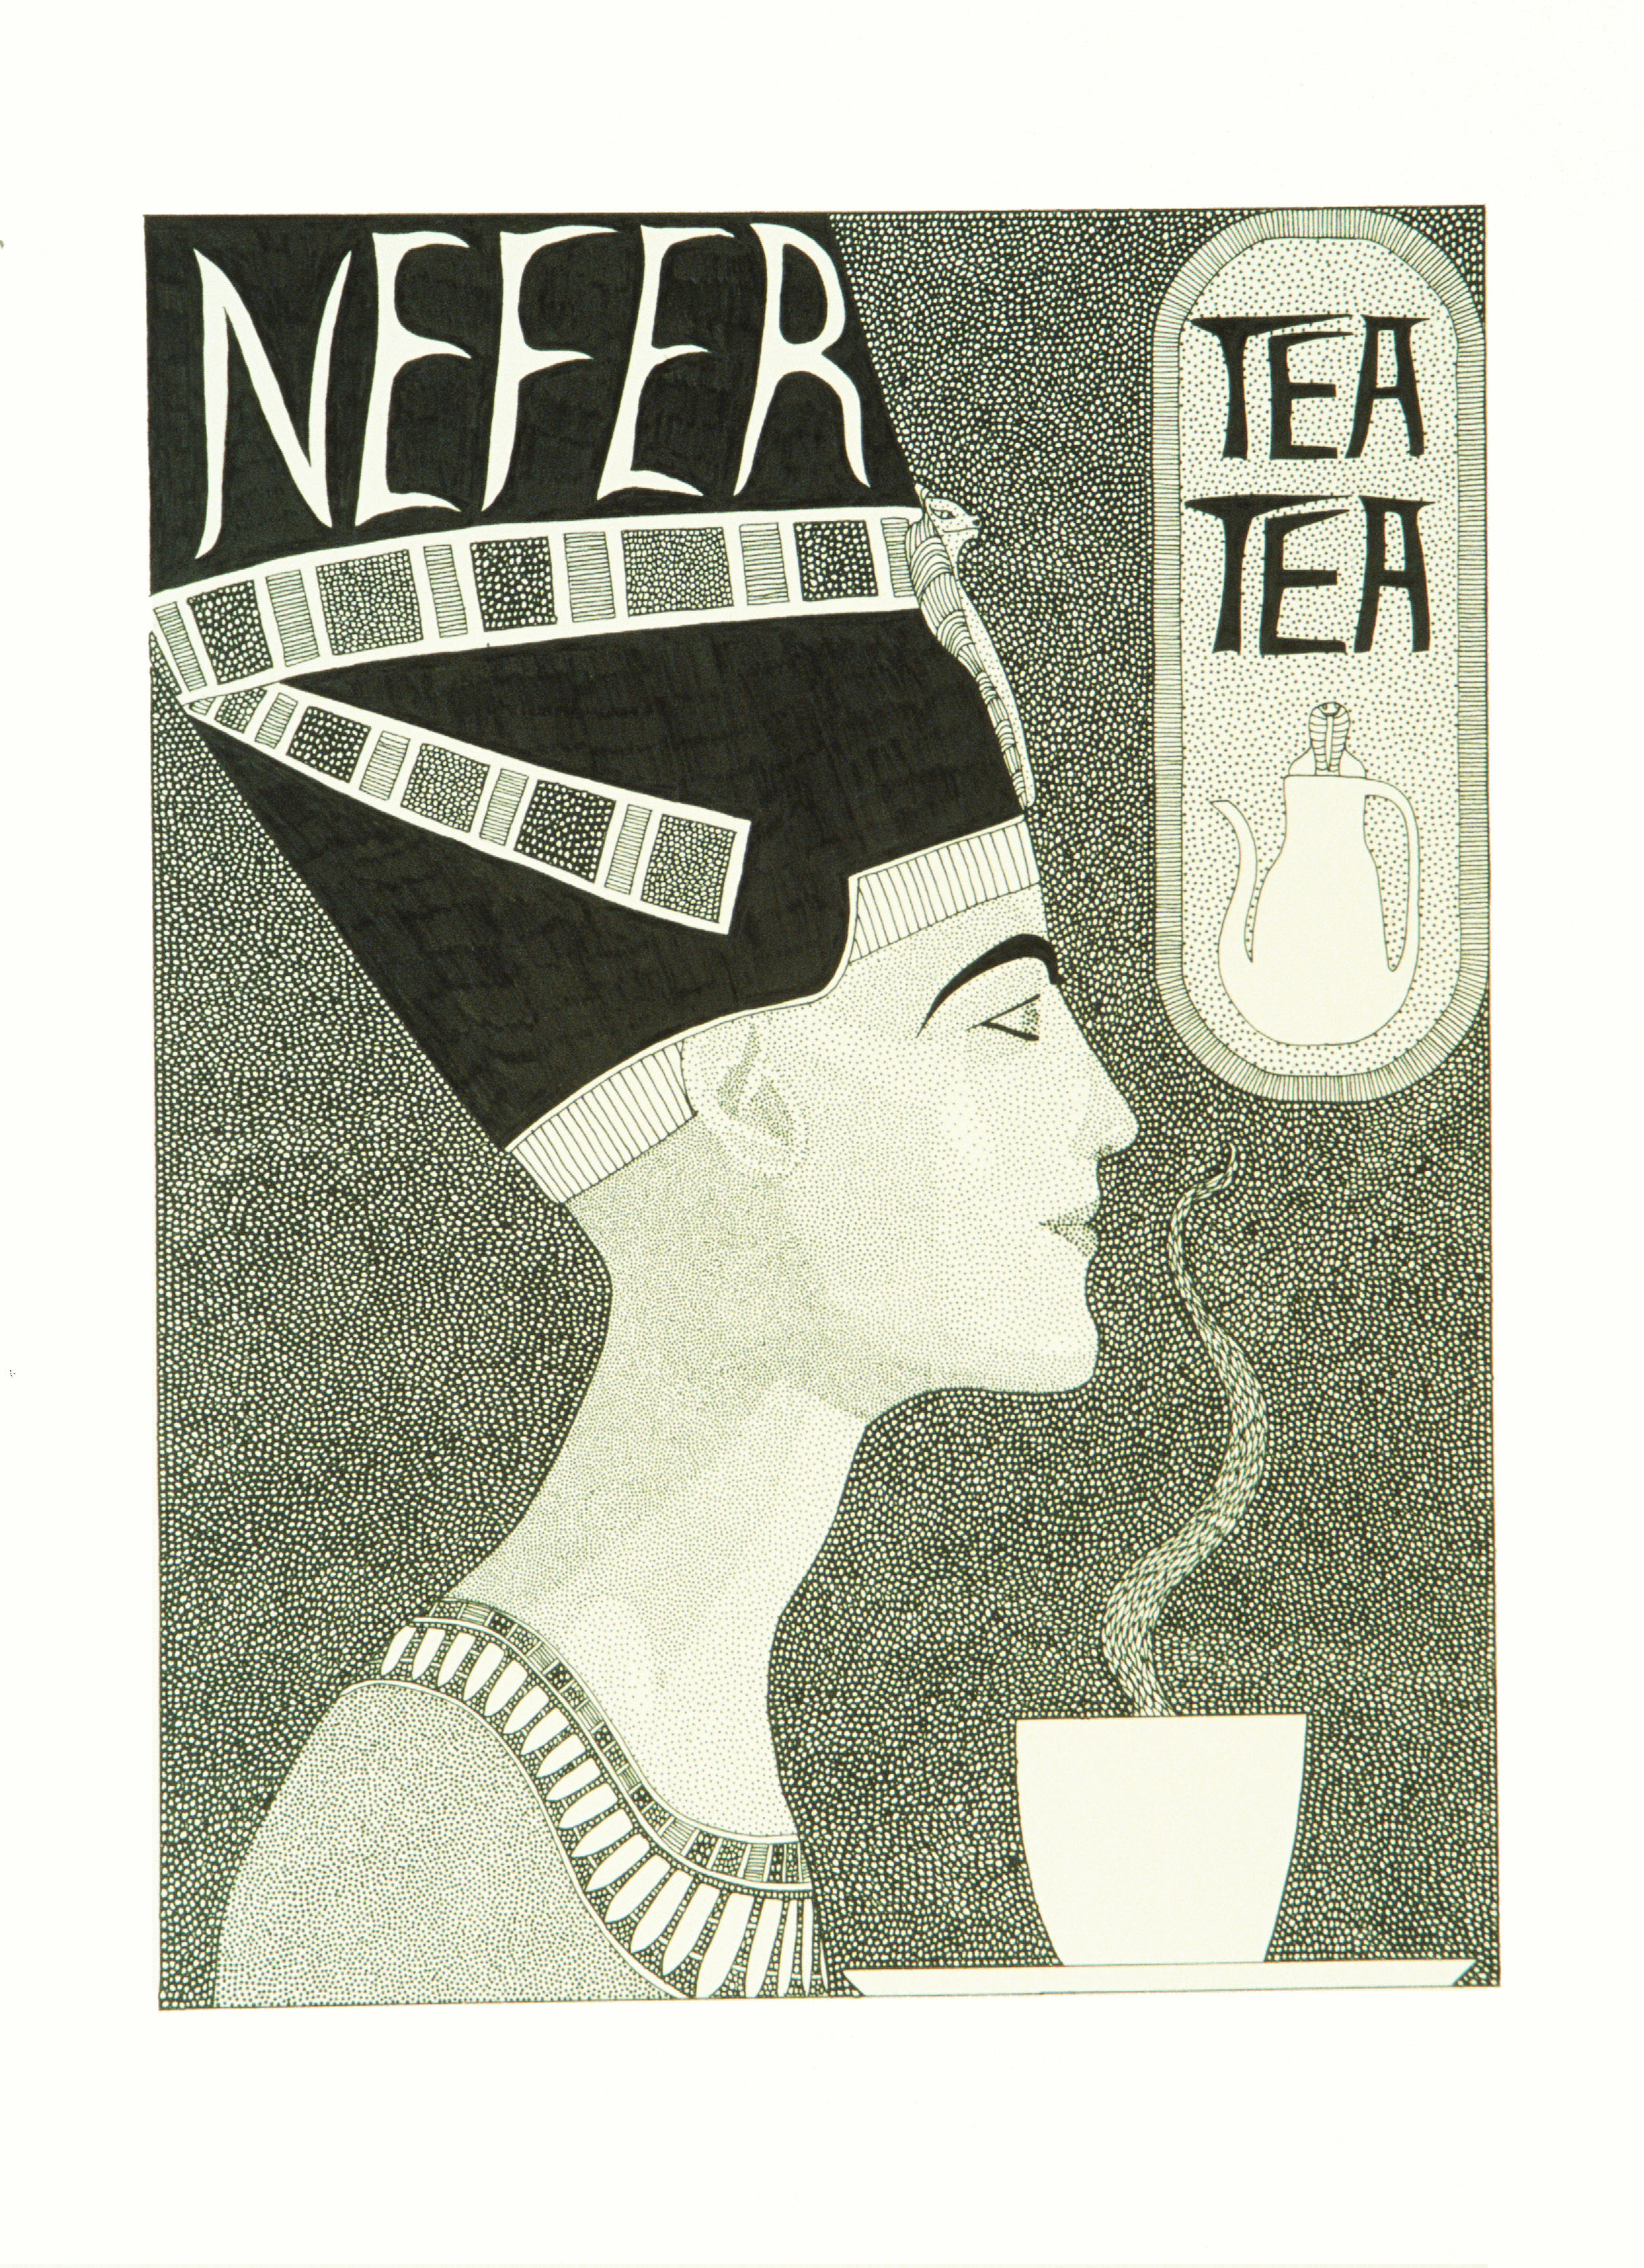 Nefer Tea Tea